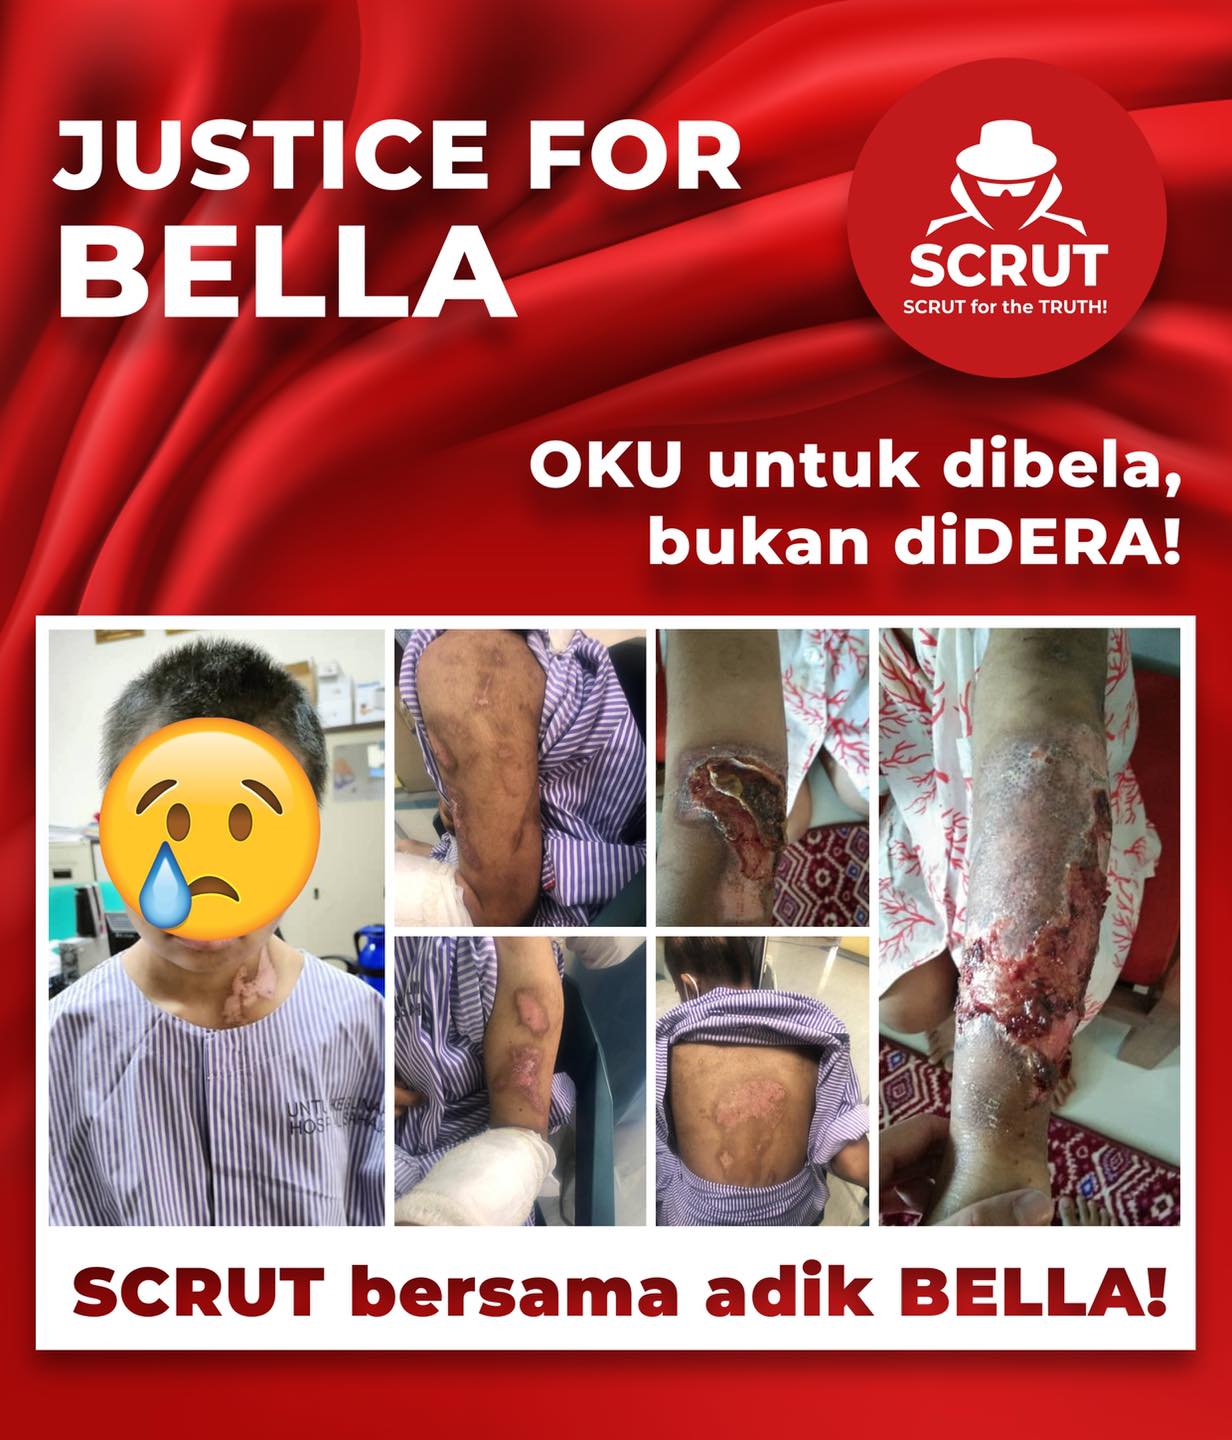 Justice for bella